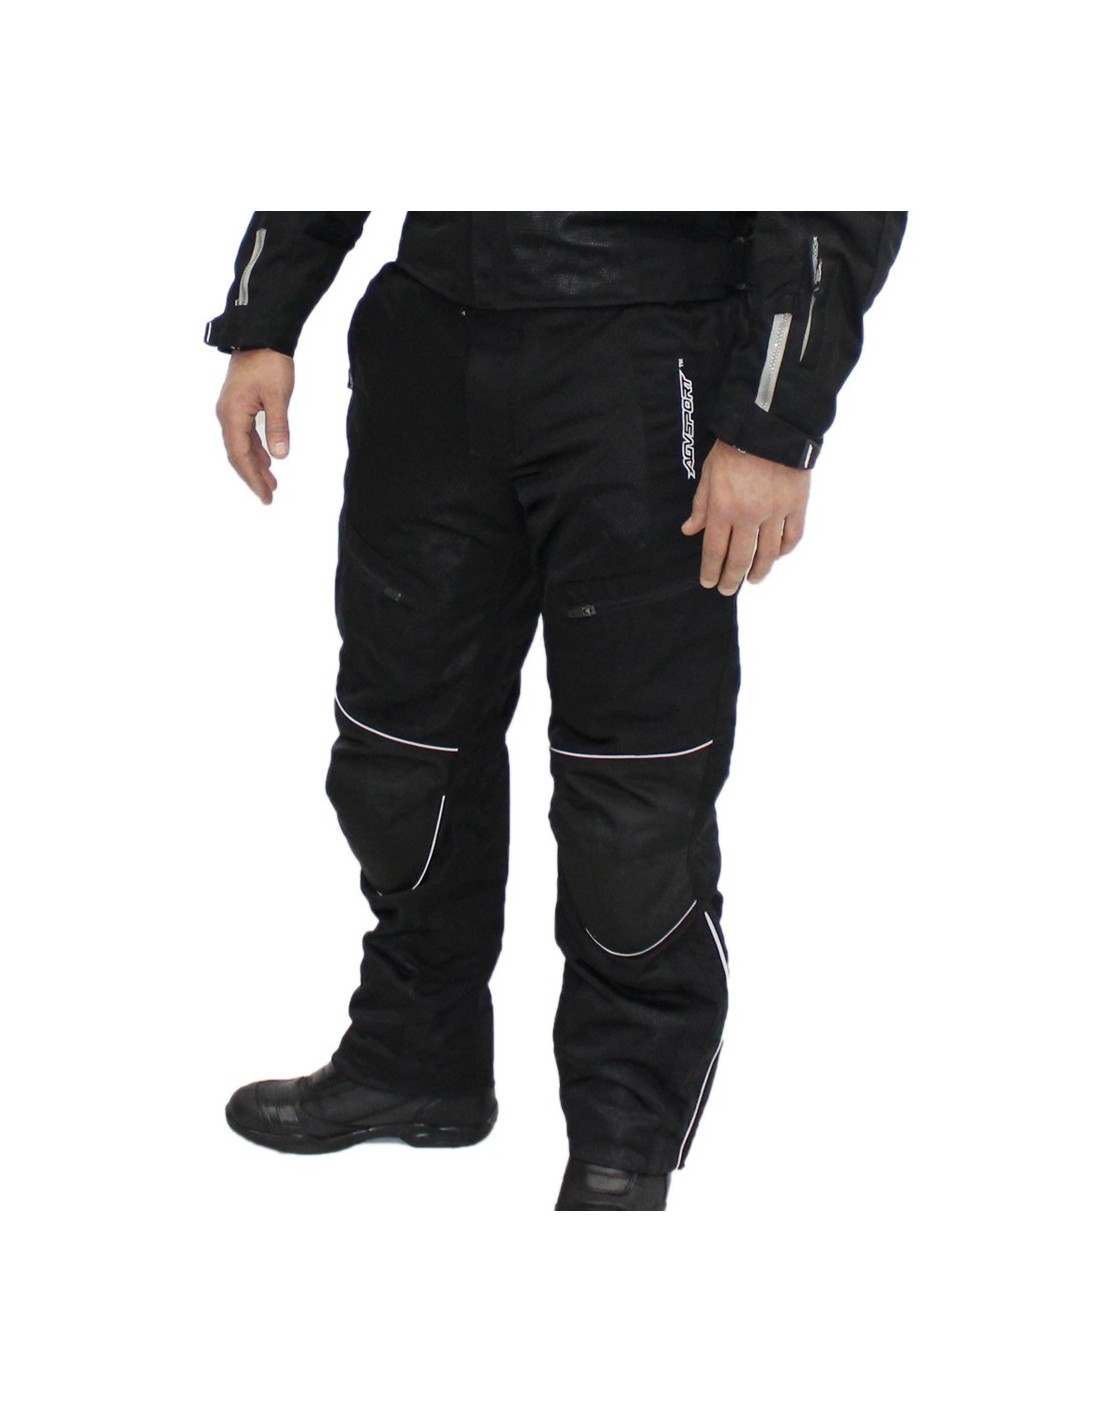 agv motorcycle pants